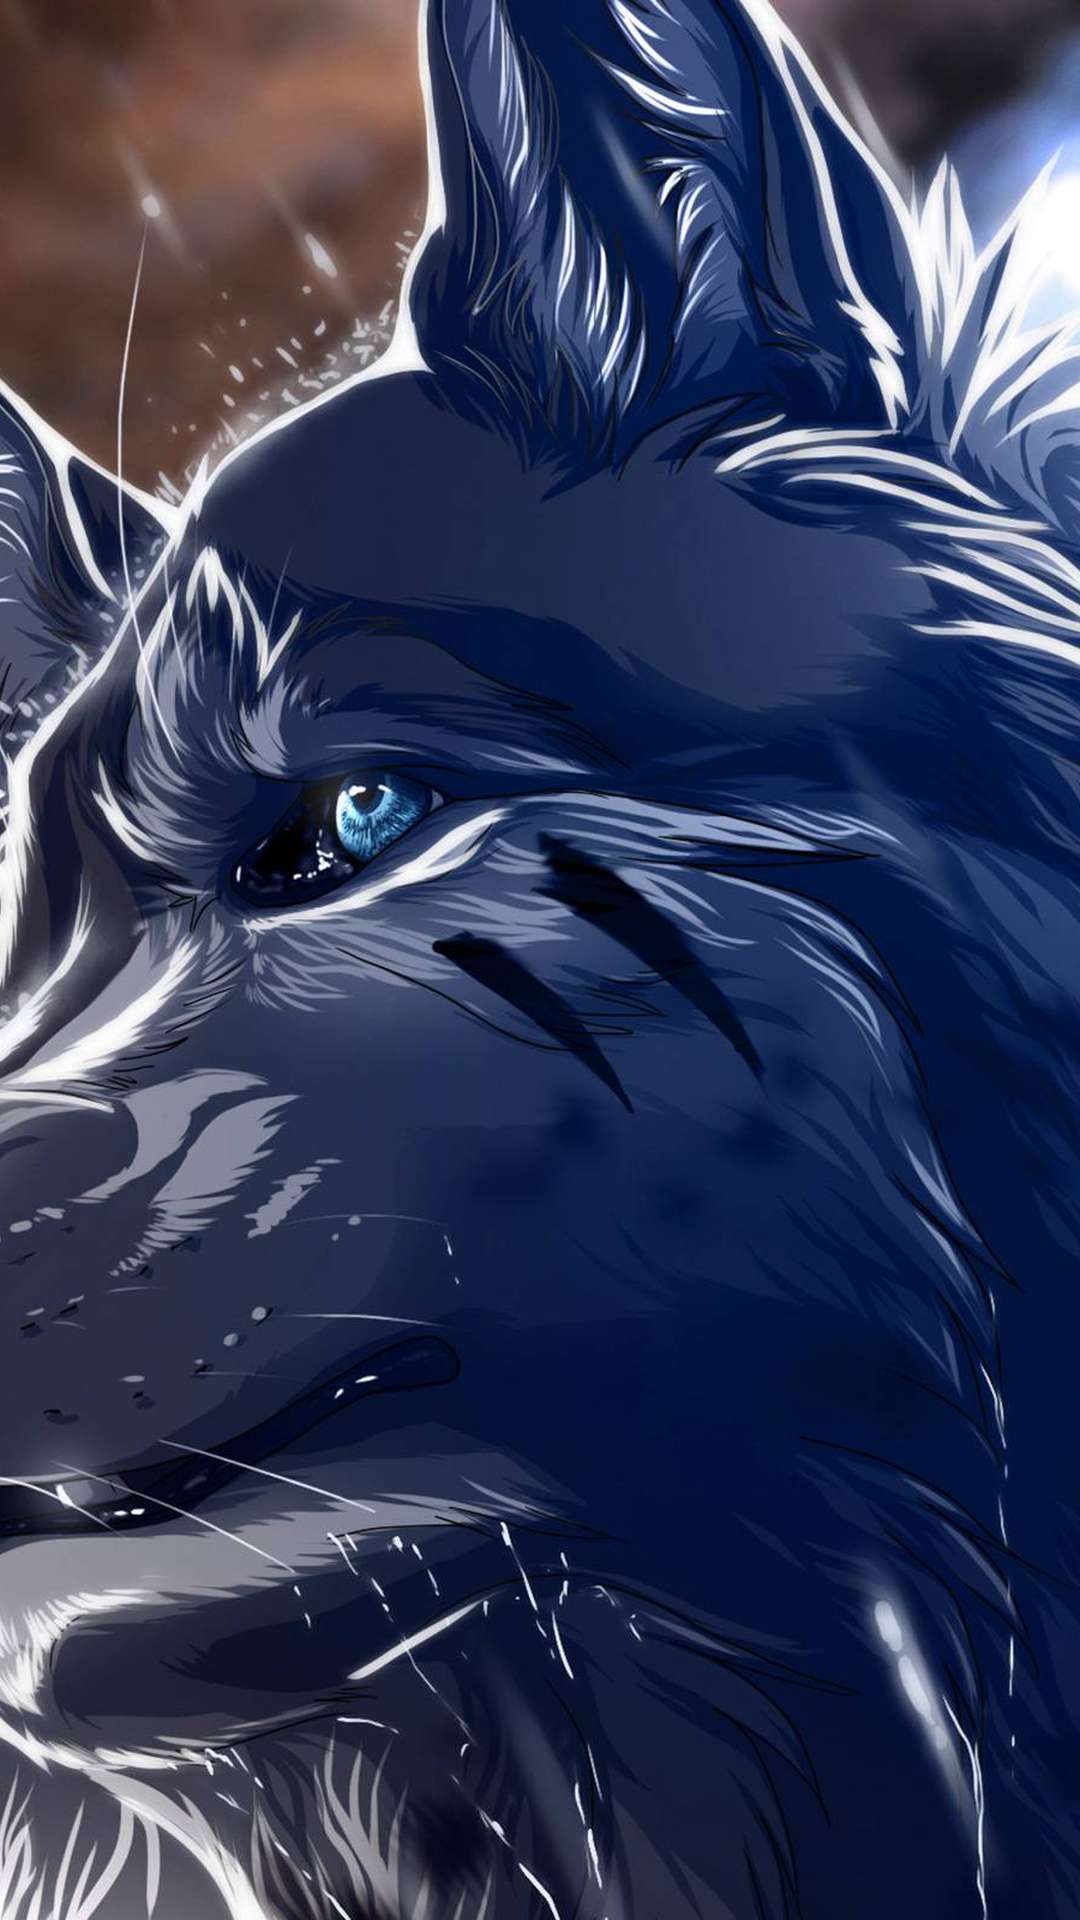 Pixilart - anime wolf boy by kingexsplosion